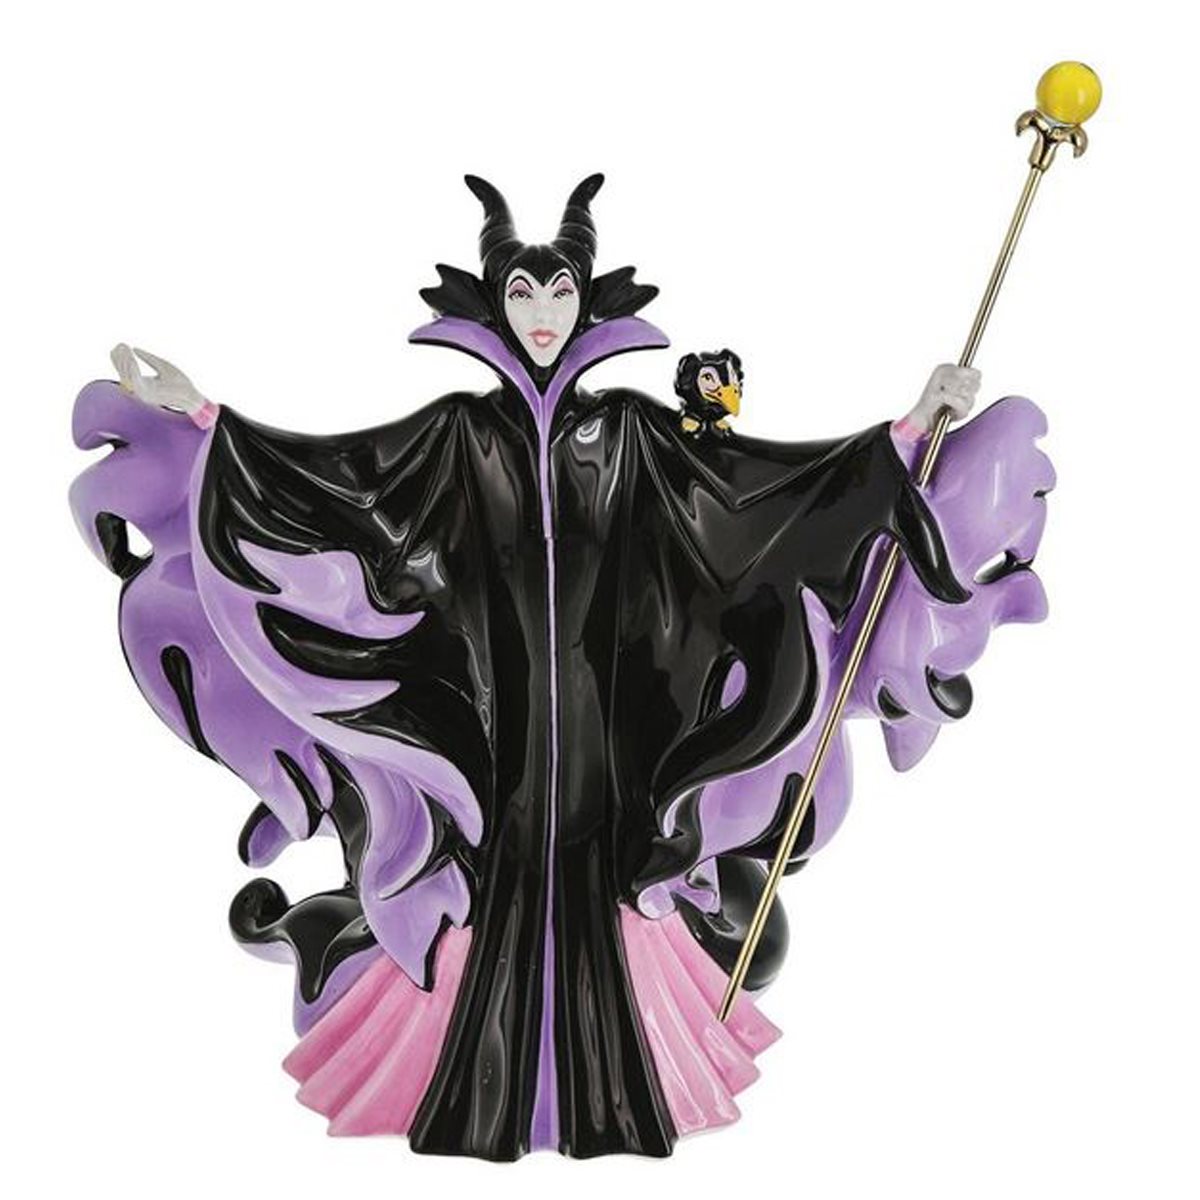 Disney Showcase Sleeping Beauty Maleficent Statue